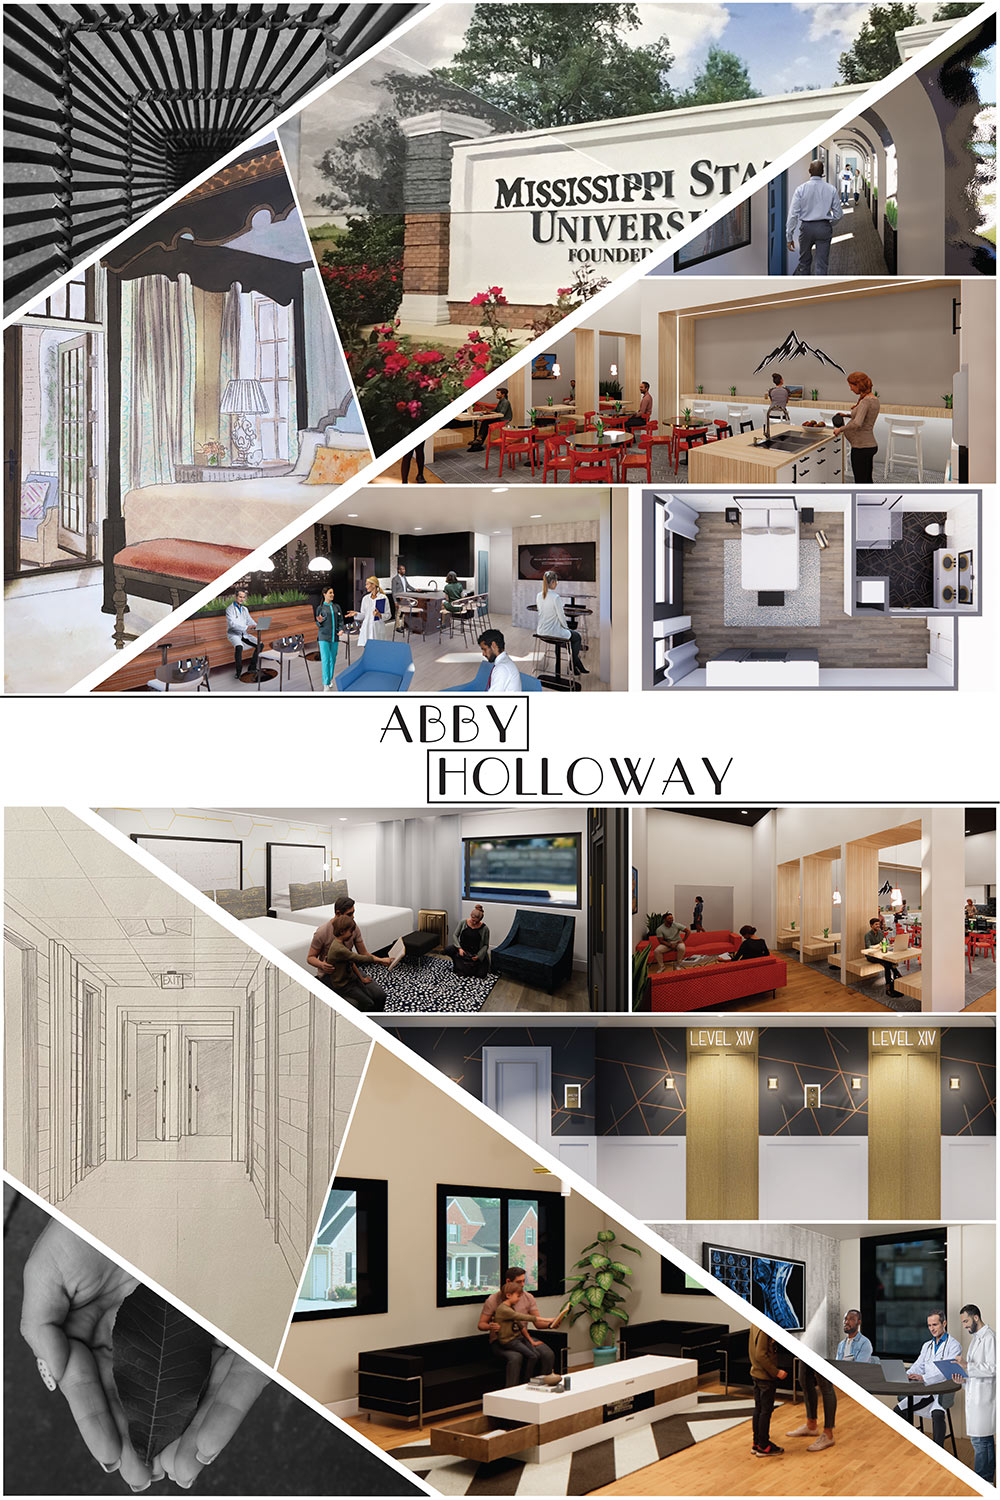 senior interior design board by Abby Holloway